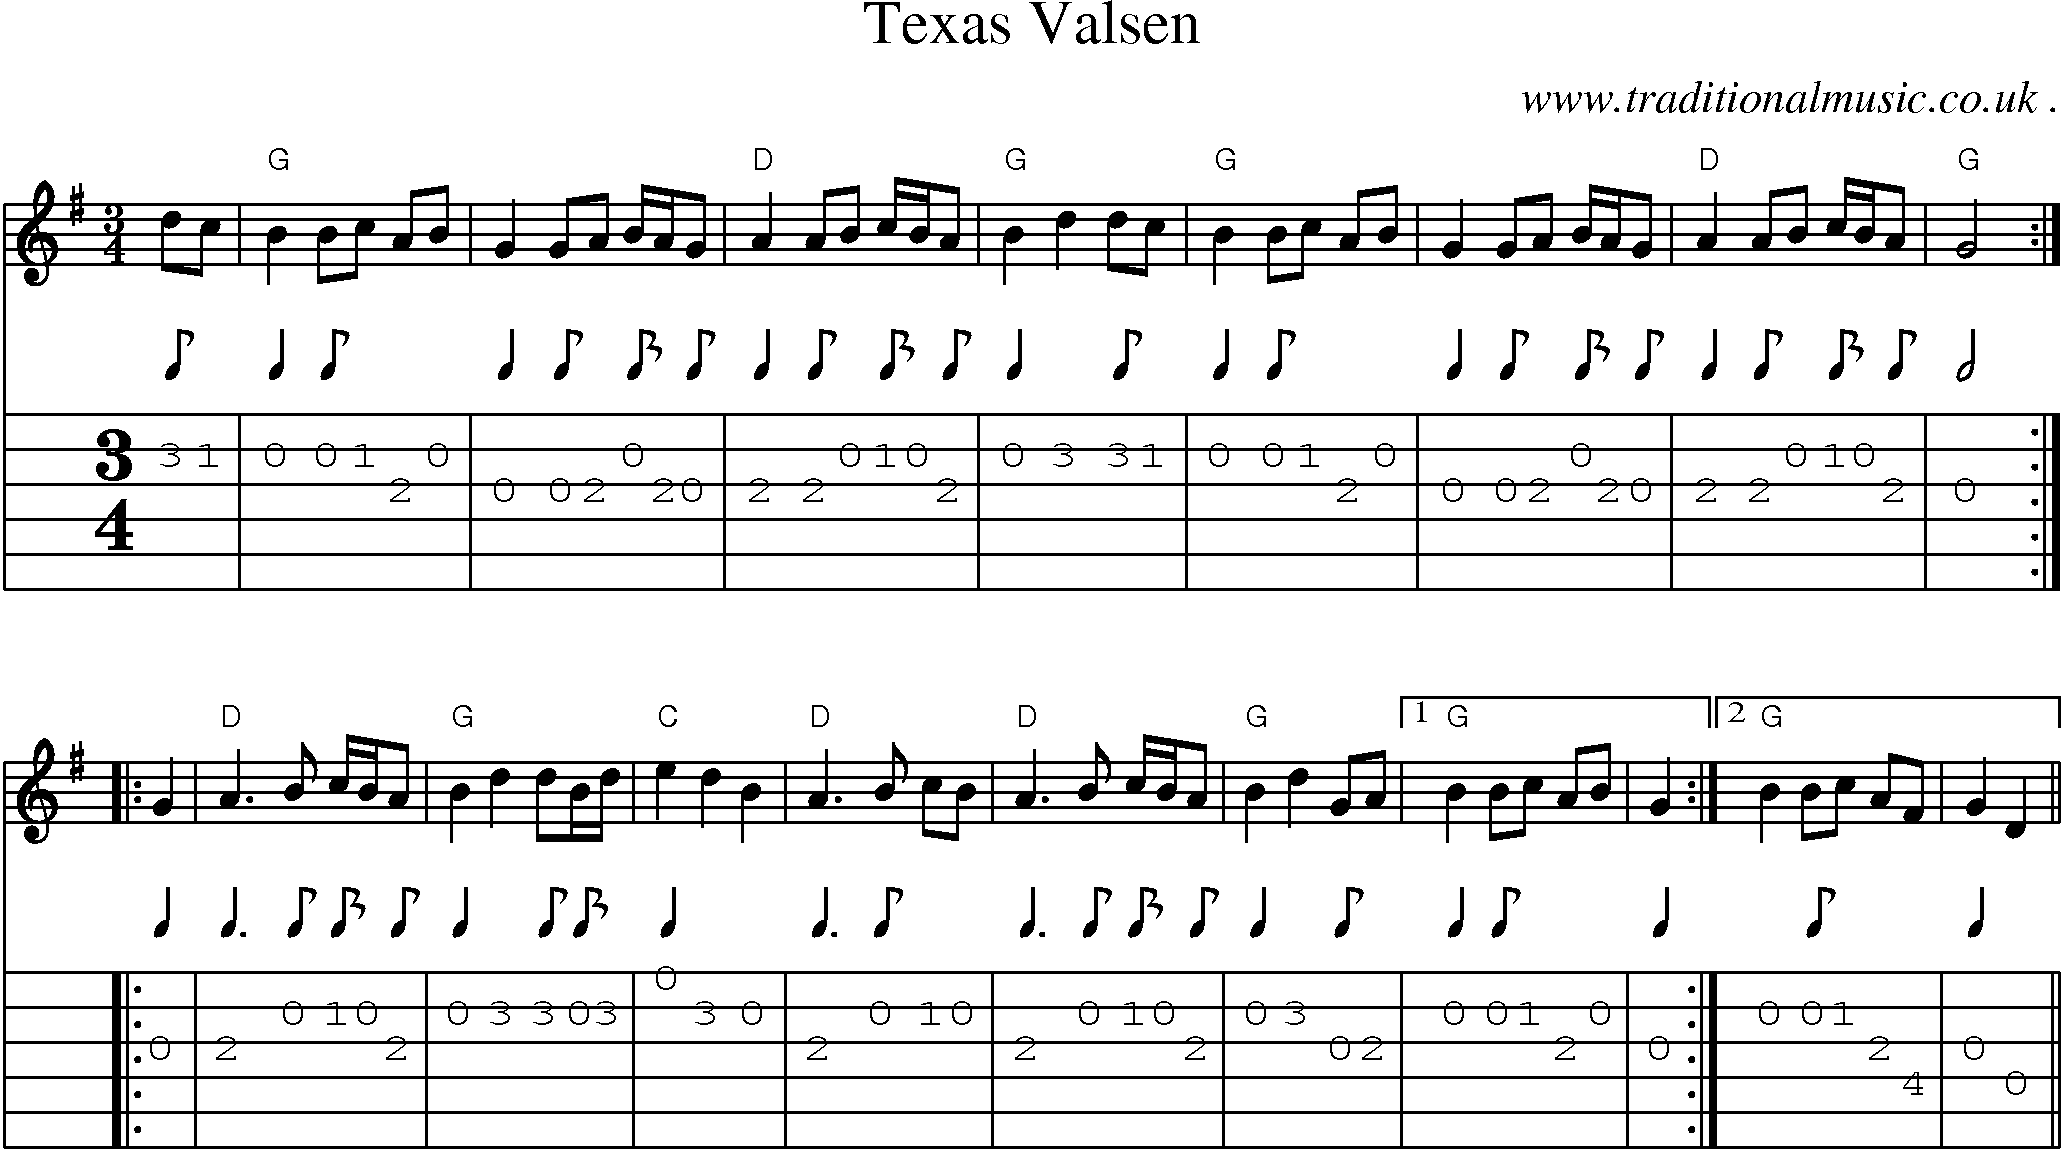 Music Score and Guitar Tabs for Texas Valsen